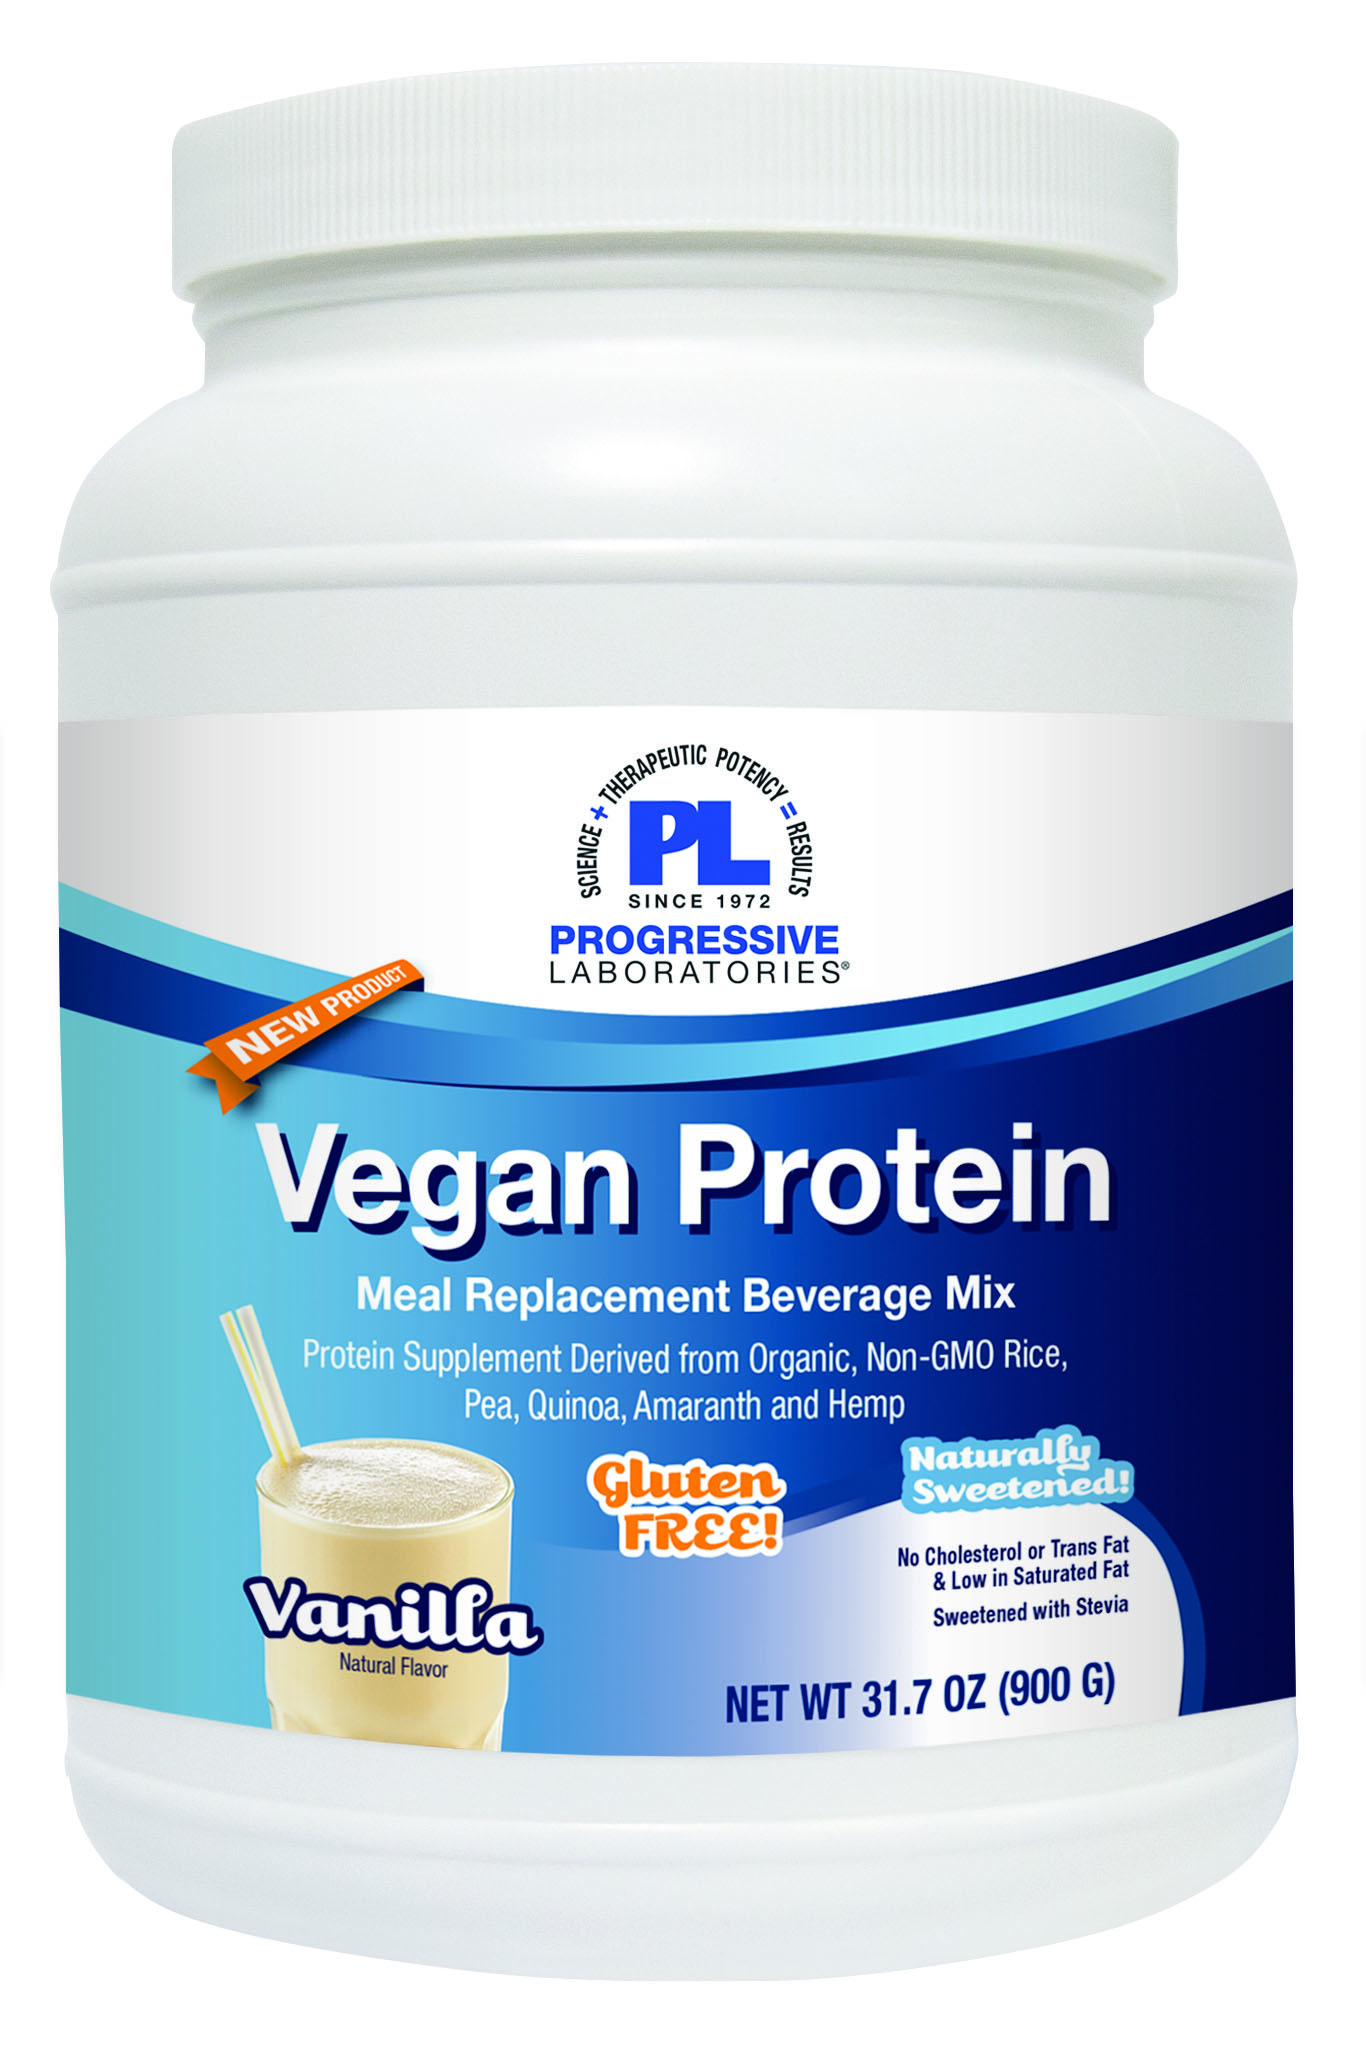 VeganProteinVanilla